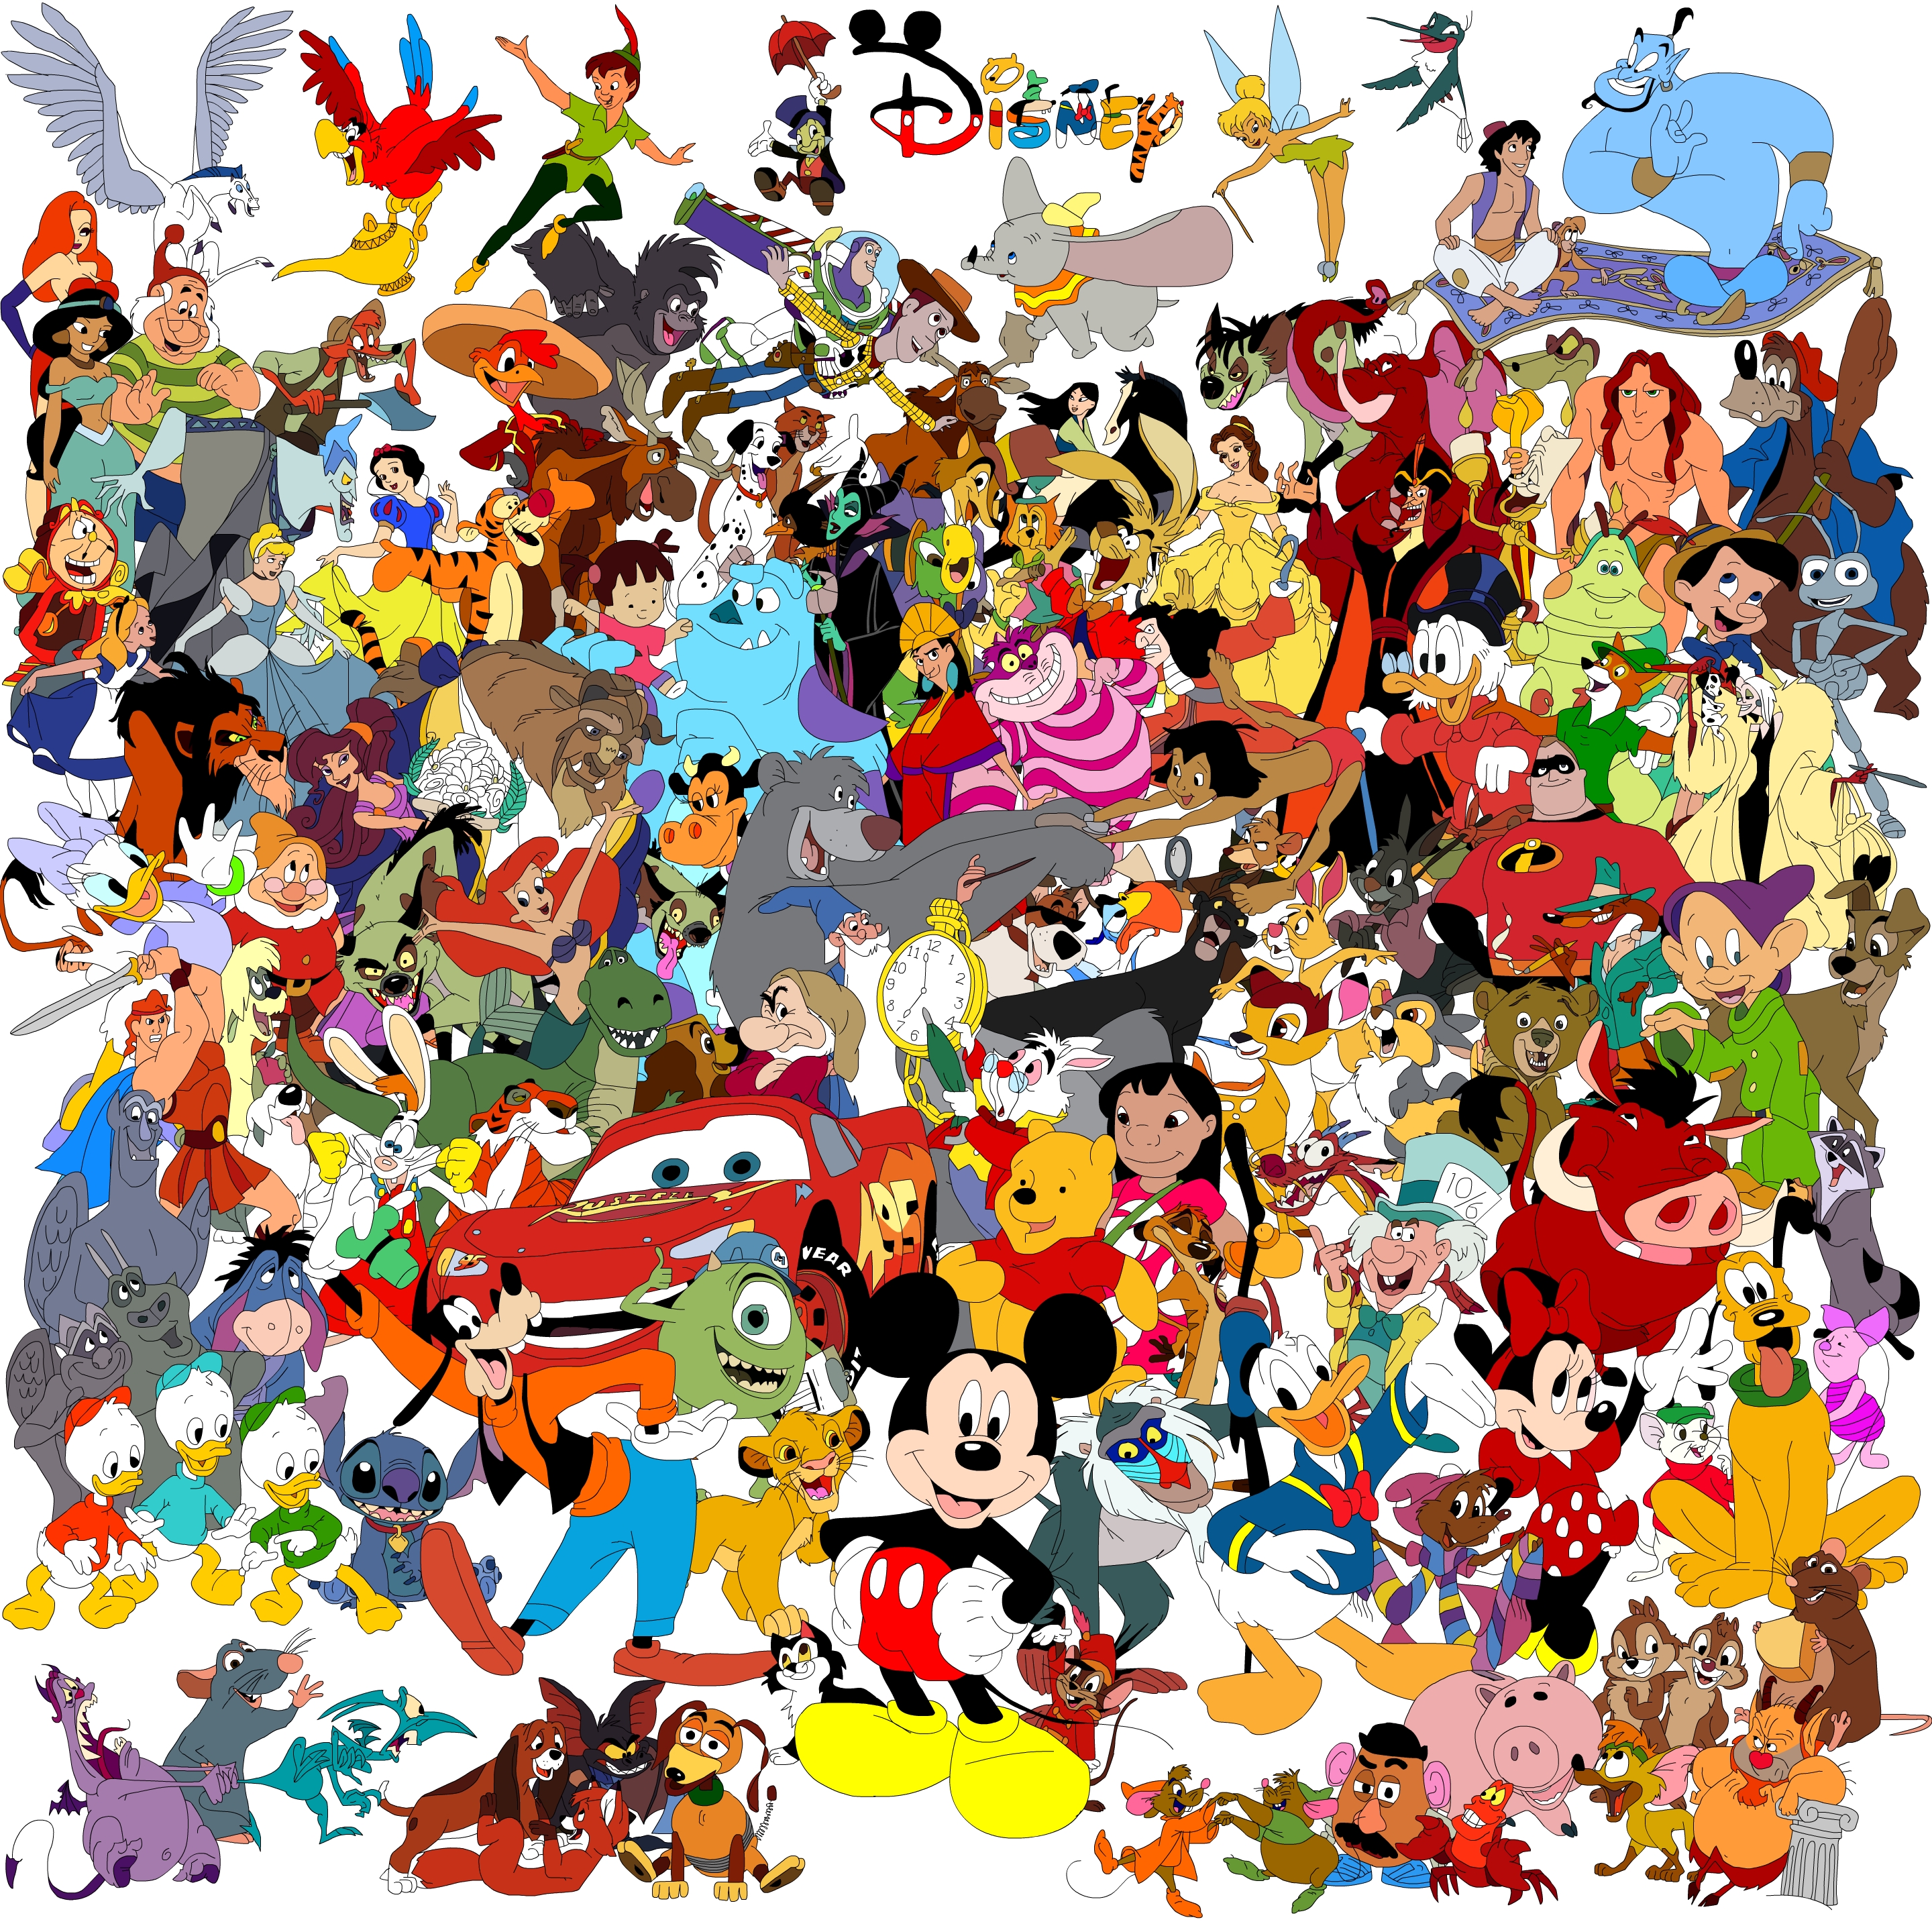 Disney Character Collage By Toongenius On Deviantart